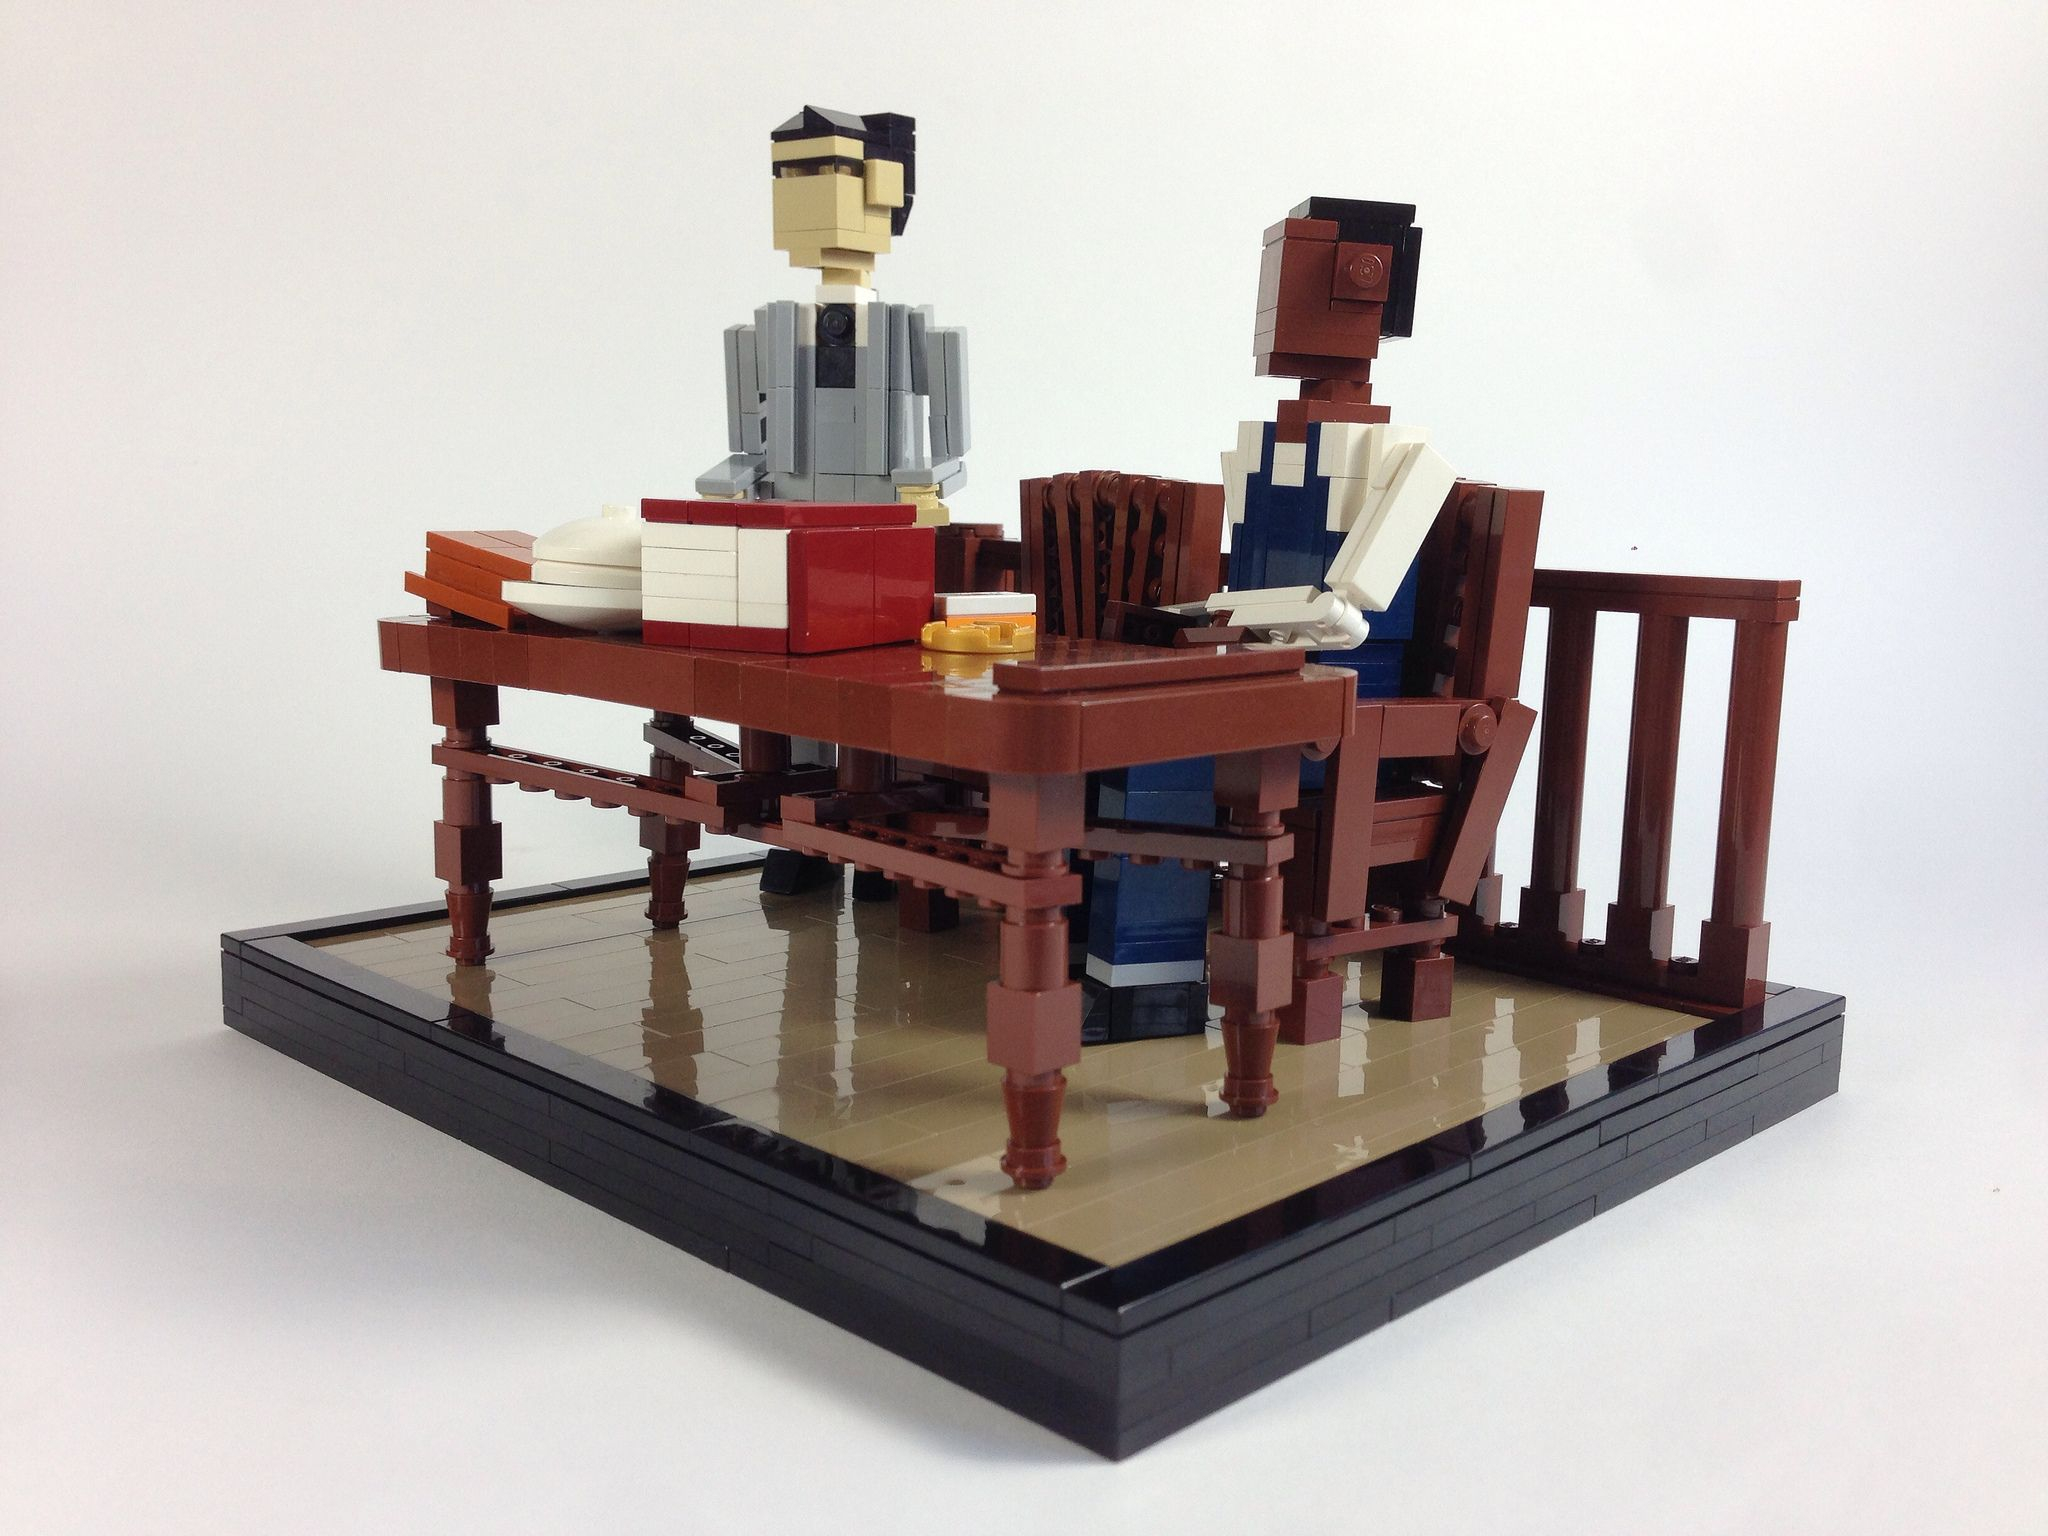 2048x1536 To Kill A Mockingbird Atticus and Tom Robinson | To kill a mockingbird, The incredibles, Lego sets